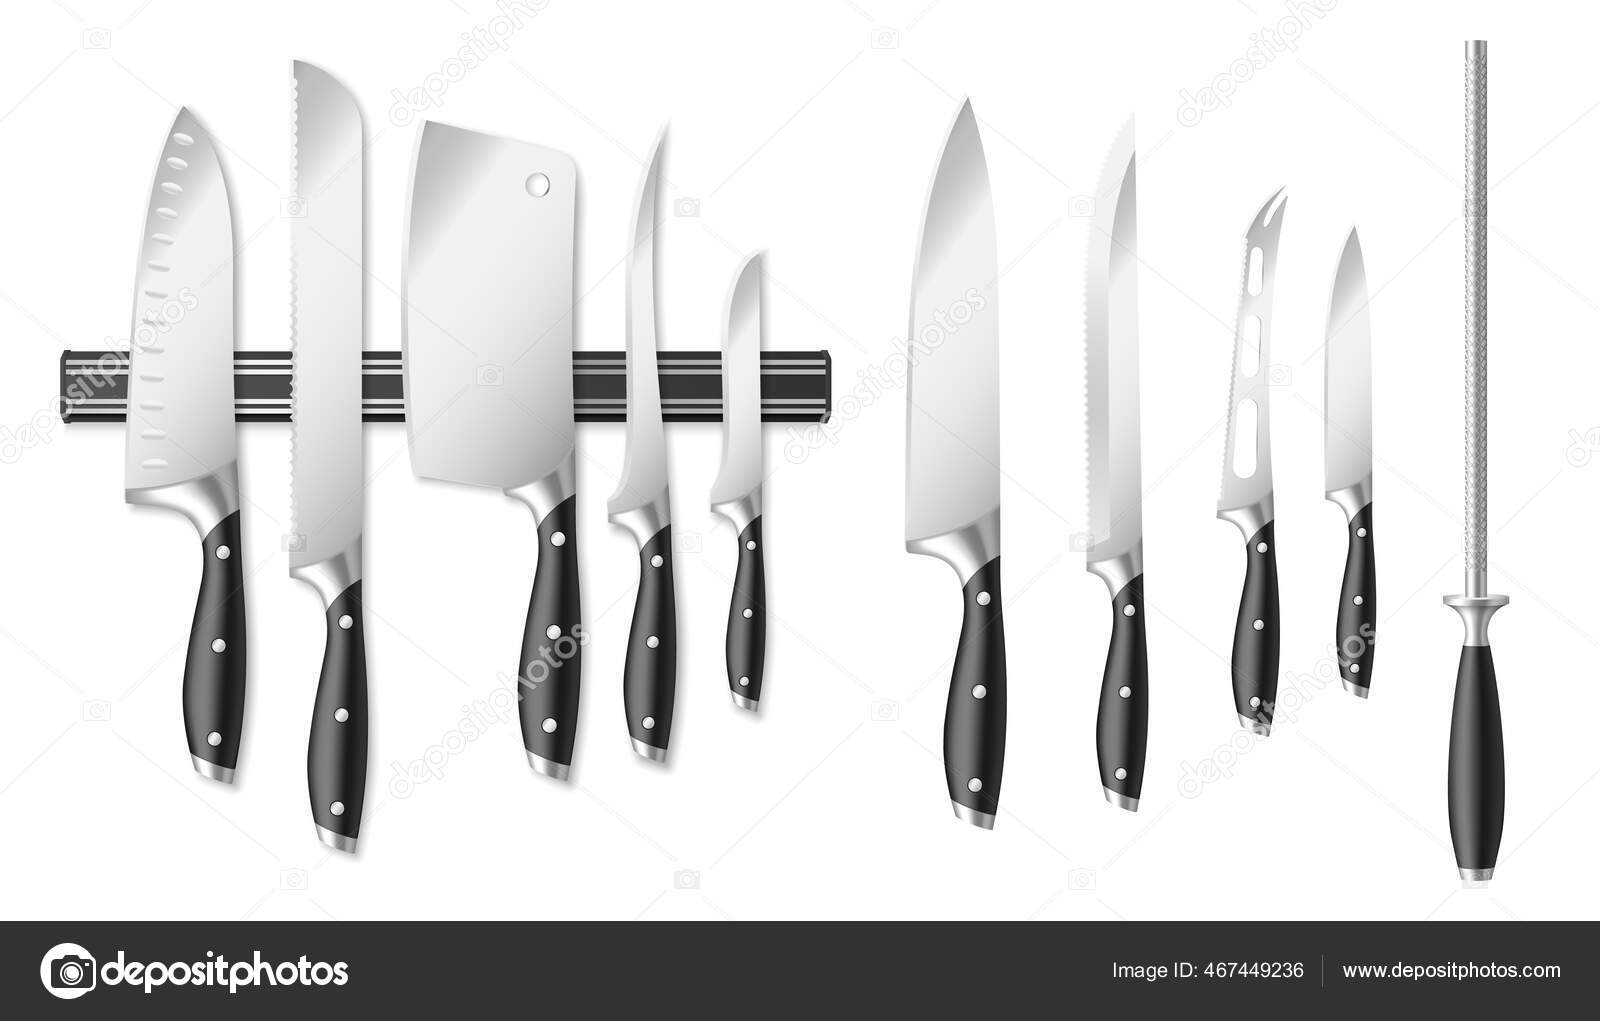 https://st2.depositphotos.com/33417770/46744/v/1600/depositphotos_467449236-stock-illustration-realistic-knives-collection-isolated-sharp.jpg